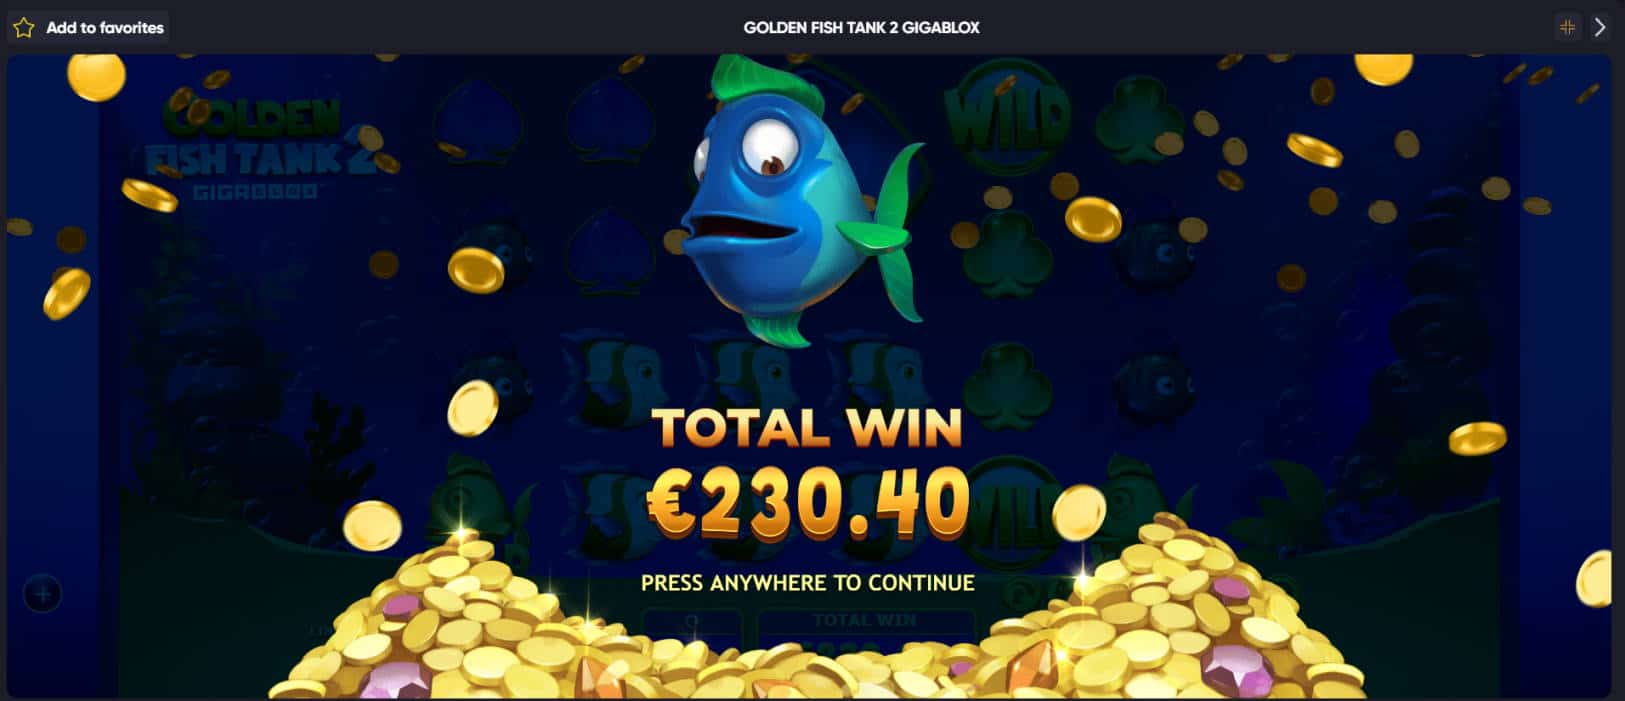 Golden Fish Tank 2 Casino win picture by Jonkki 27.11.2021 230.40e 922X